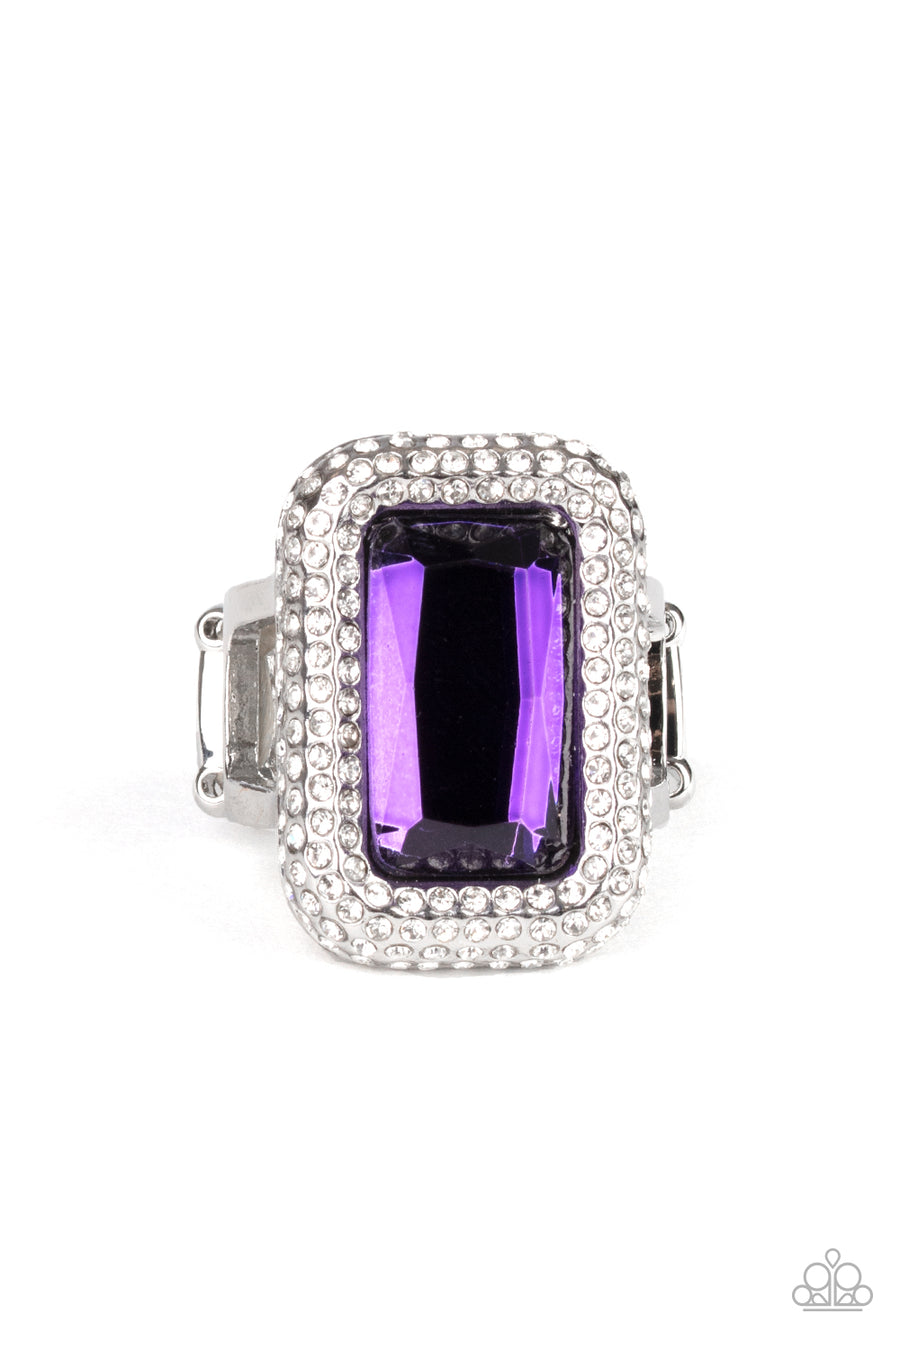 A Grand Statement Maker - Purple Rhinestone Ring - Paparazzi Accessories